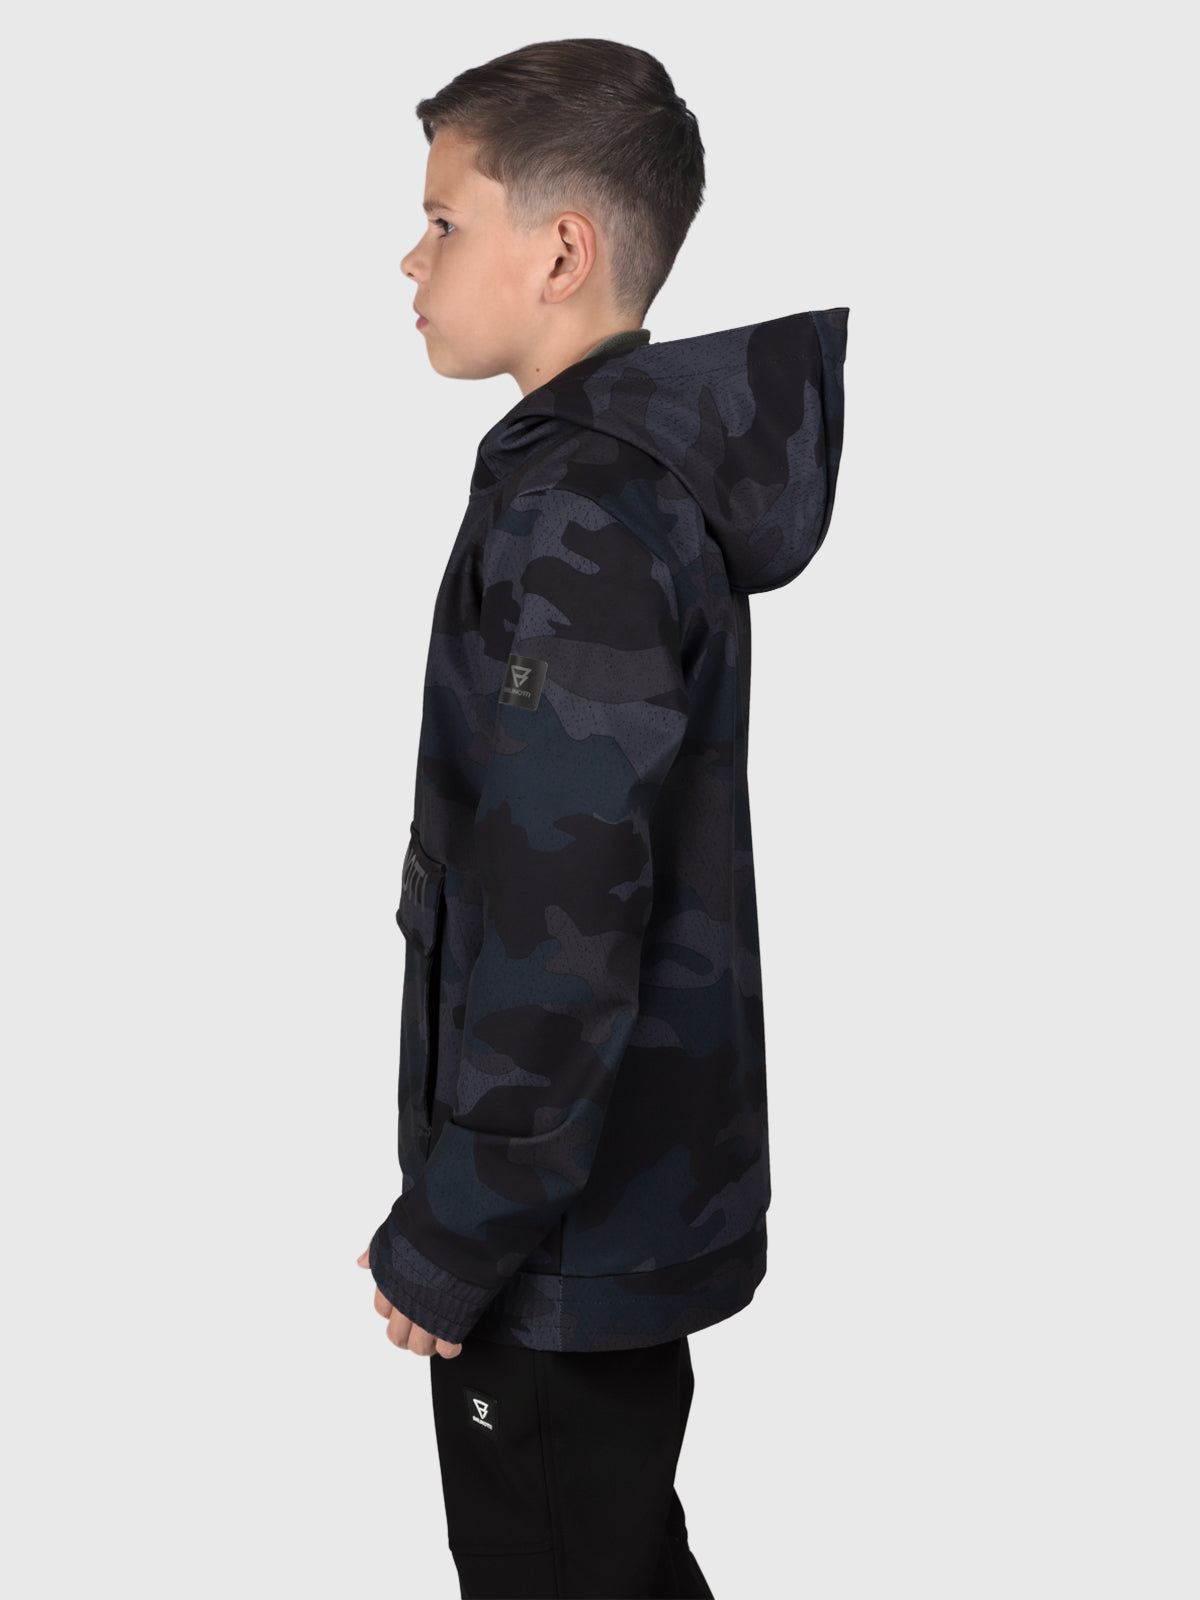 Cranemory-AO Jungen Anorak Softshell Jacke | Camouflage Grau